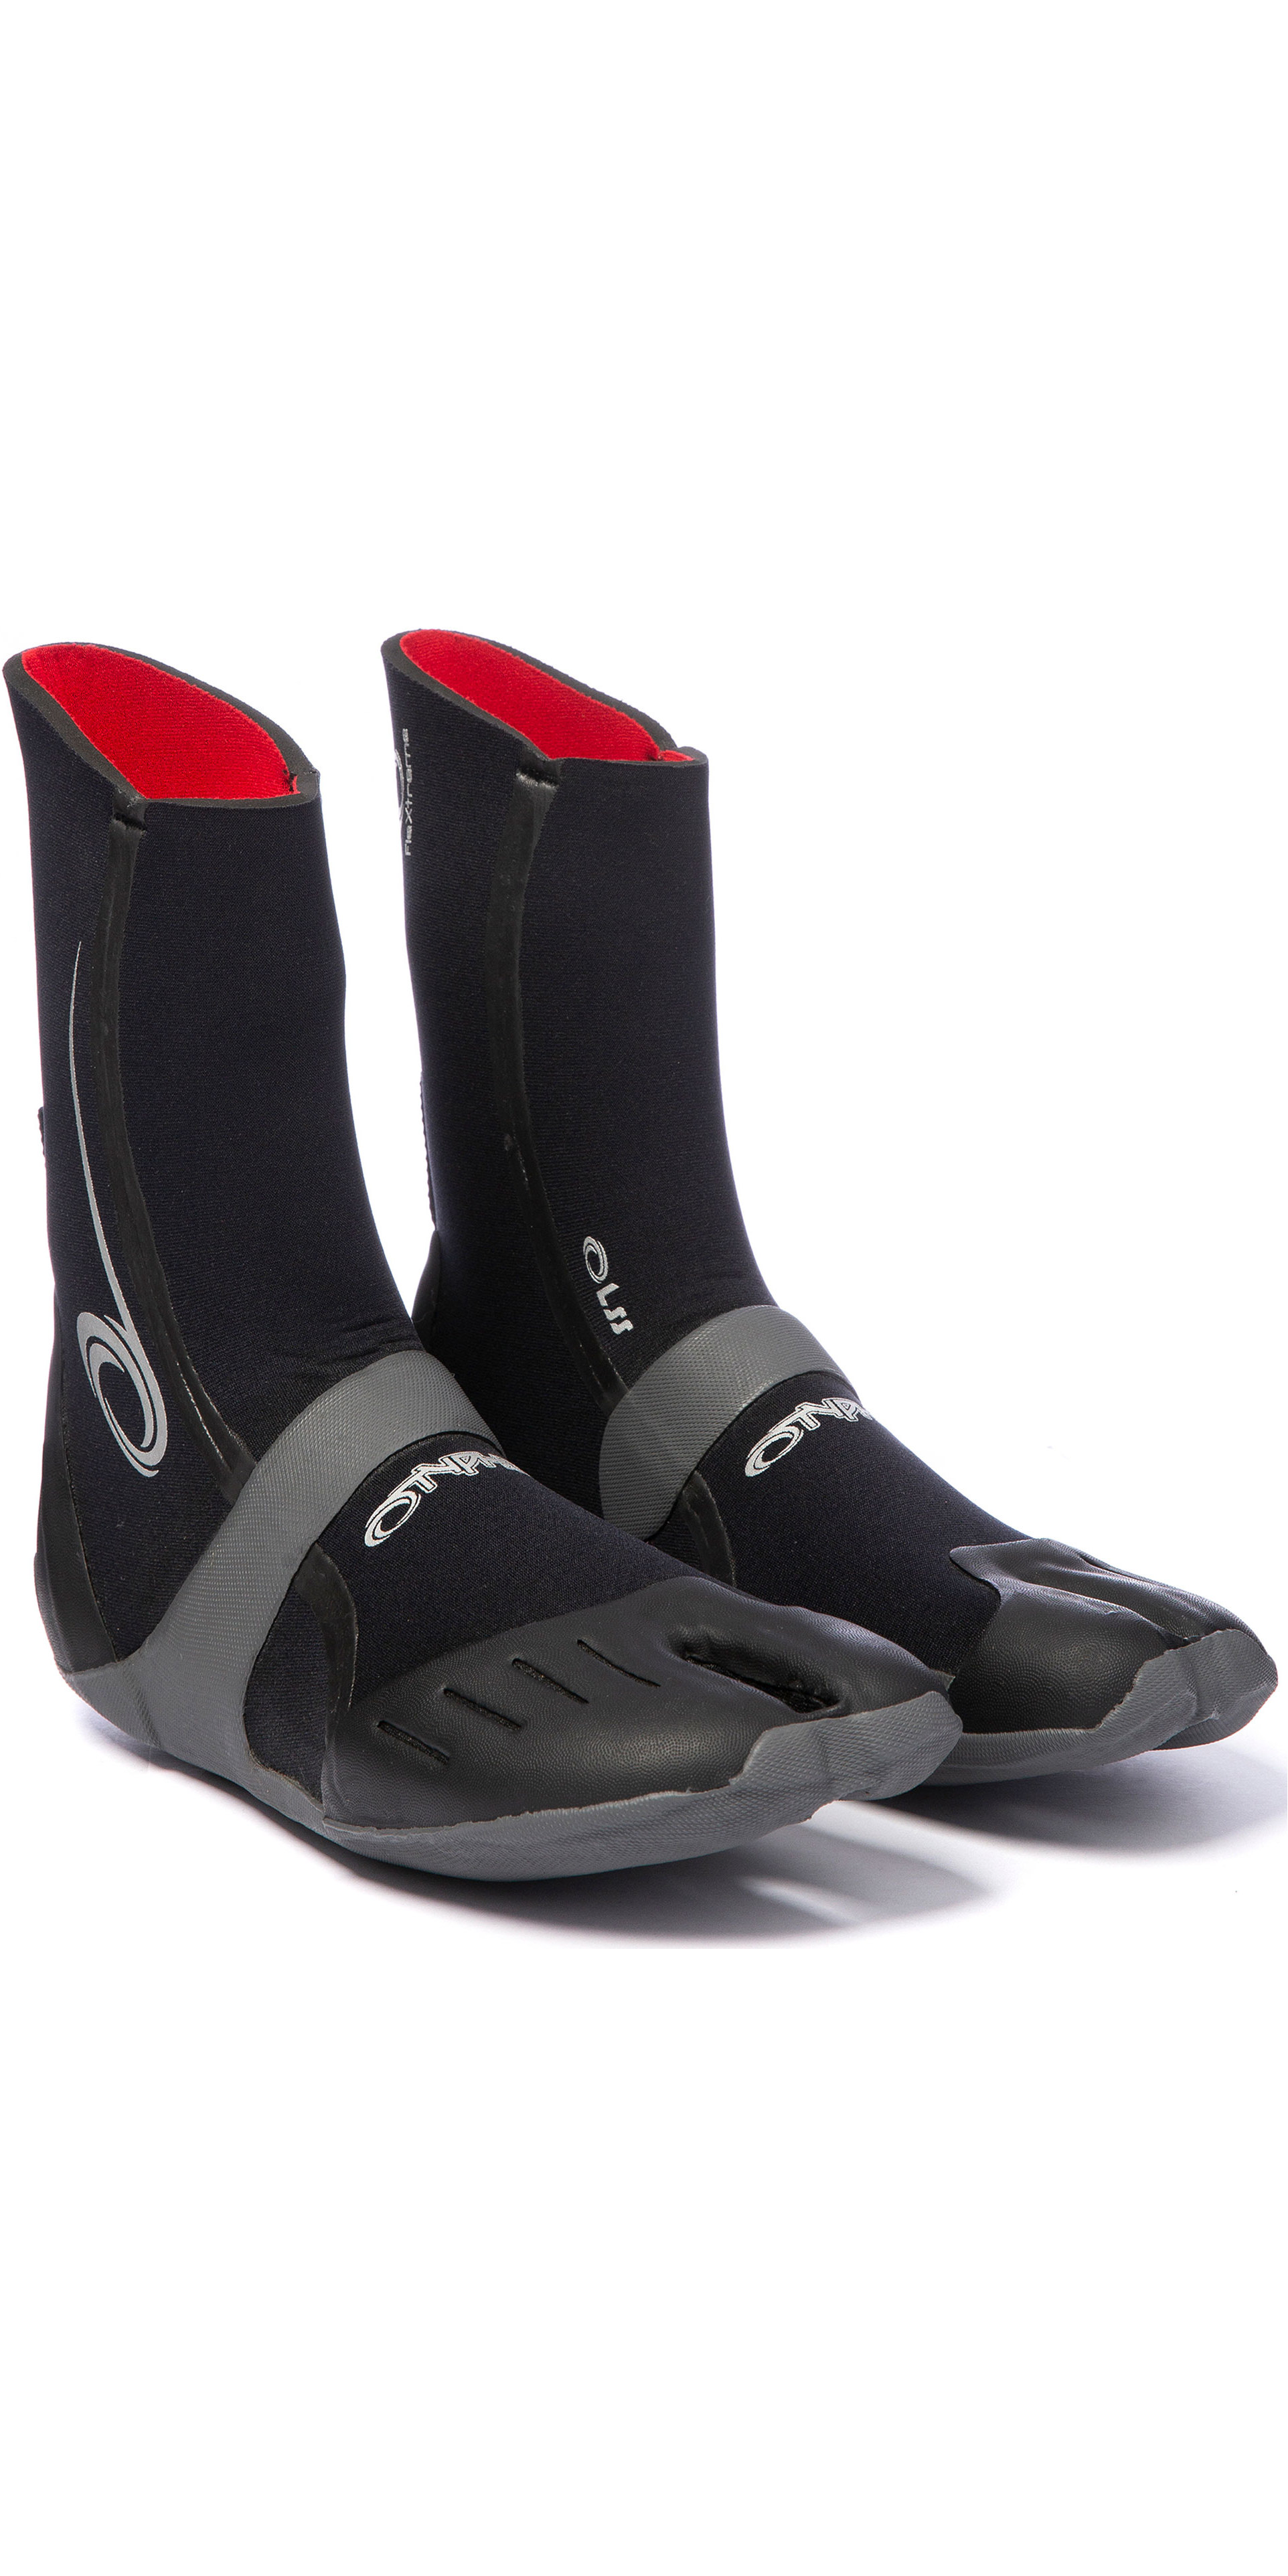 Quiksilver 5mm Highline Series Lite Split Toe Kids Watersports Boots 